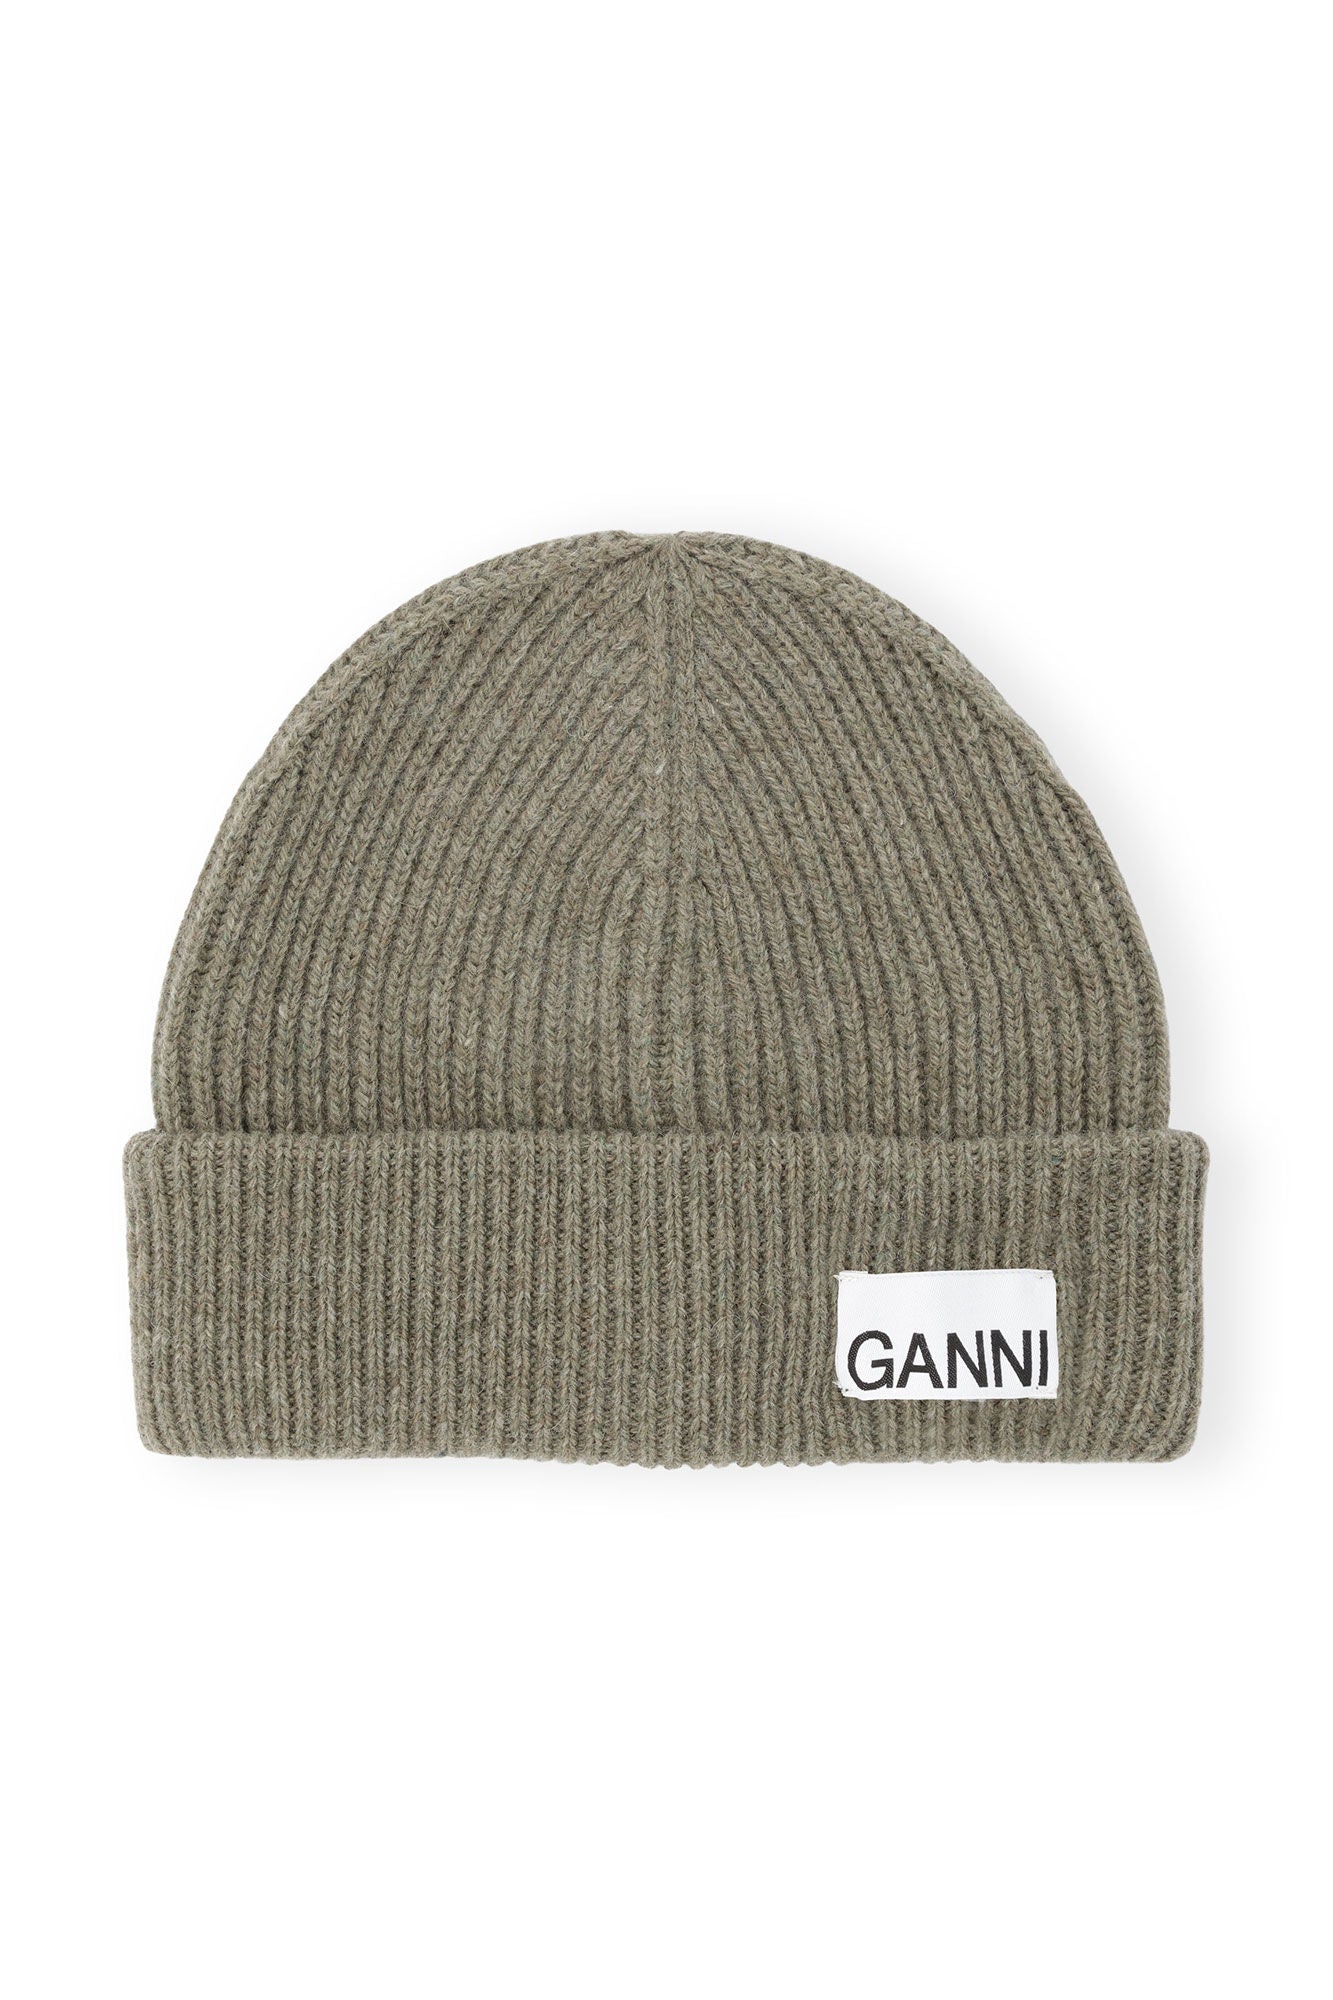 Ganni Wool Fitted Beanie